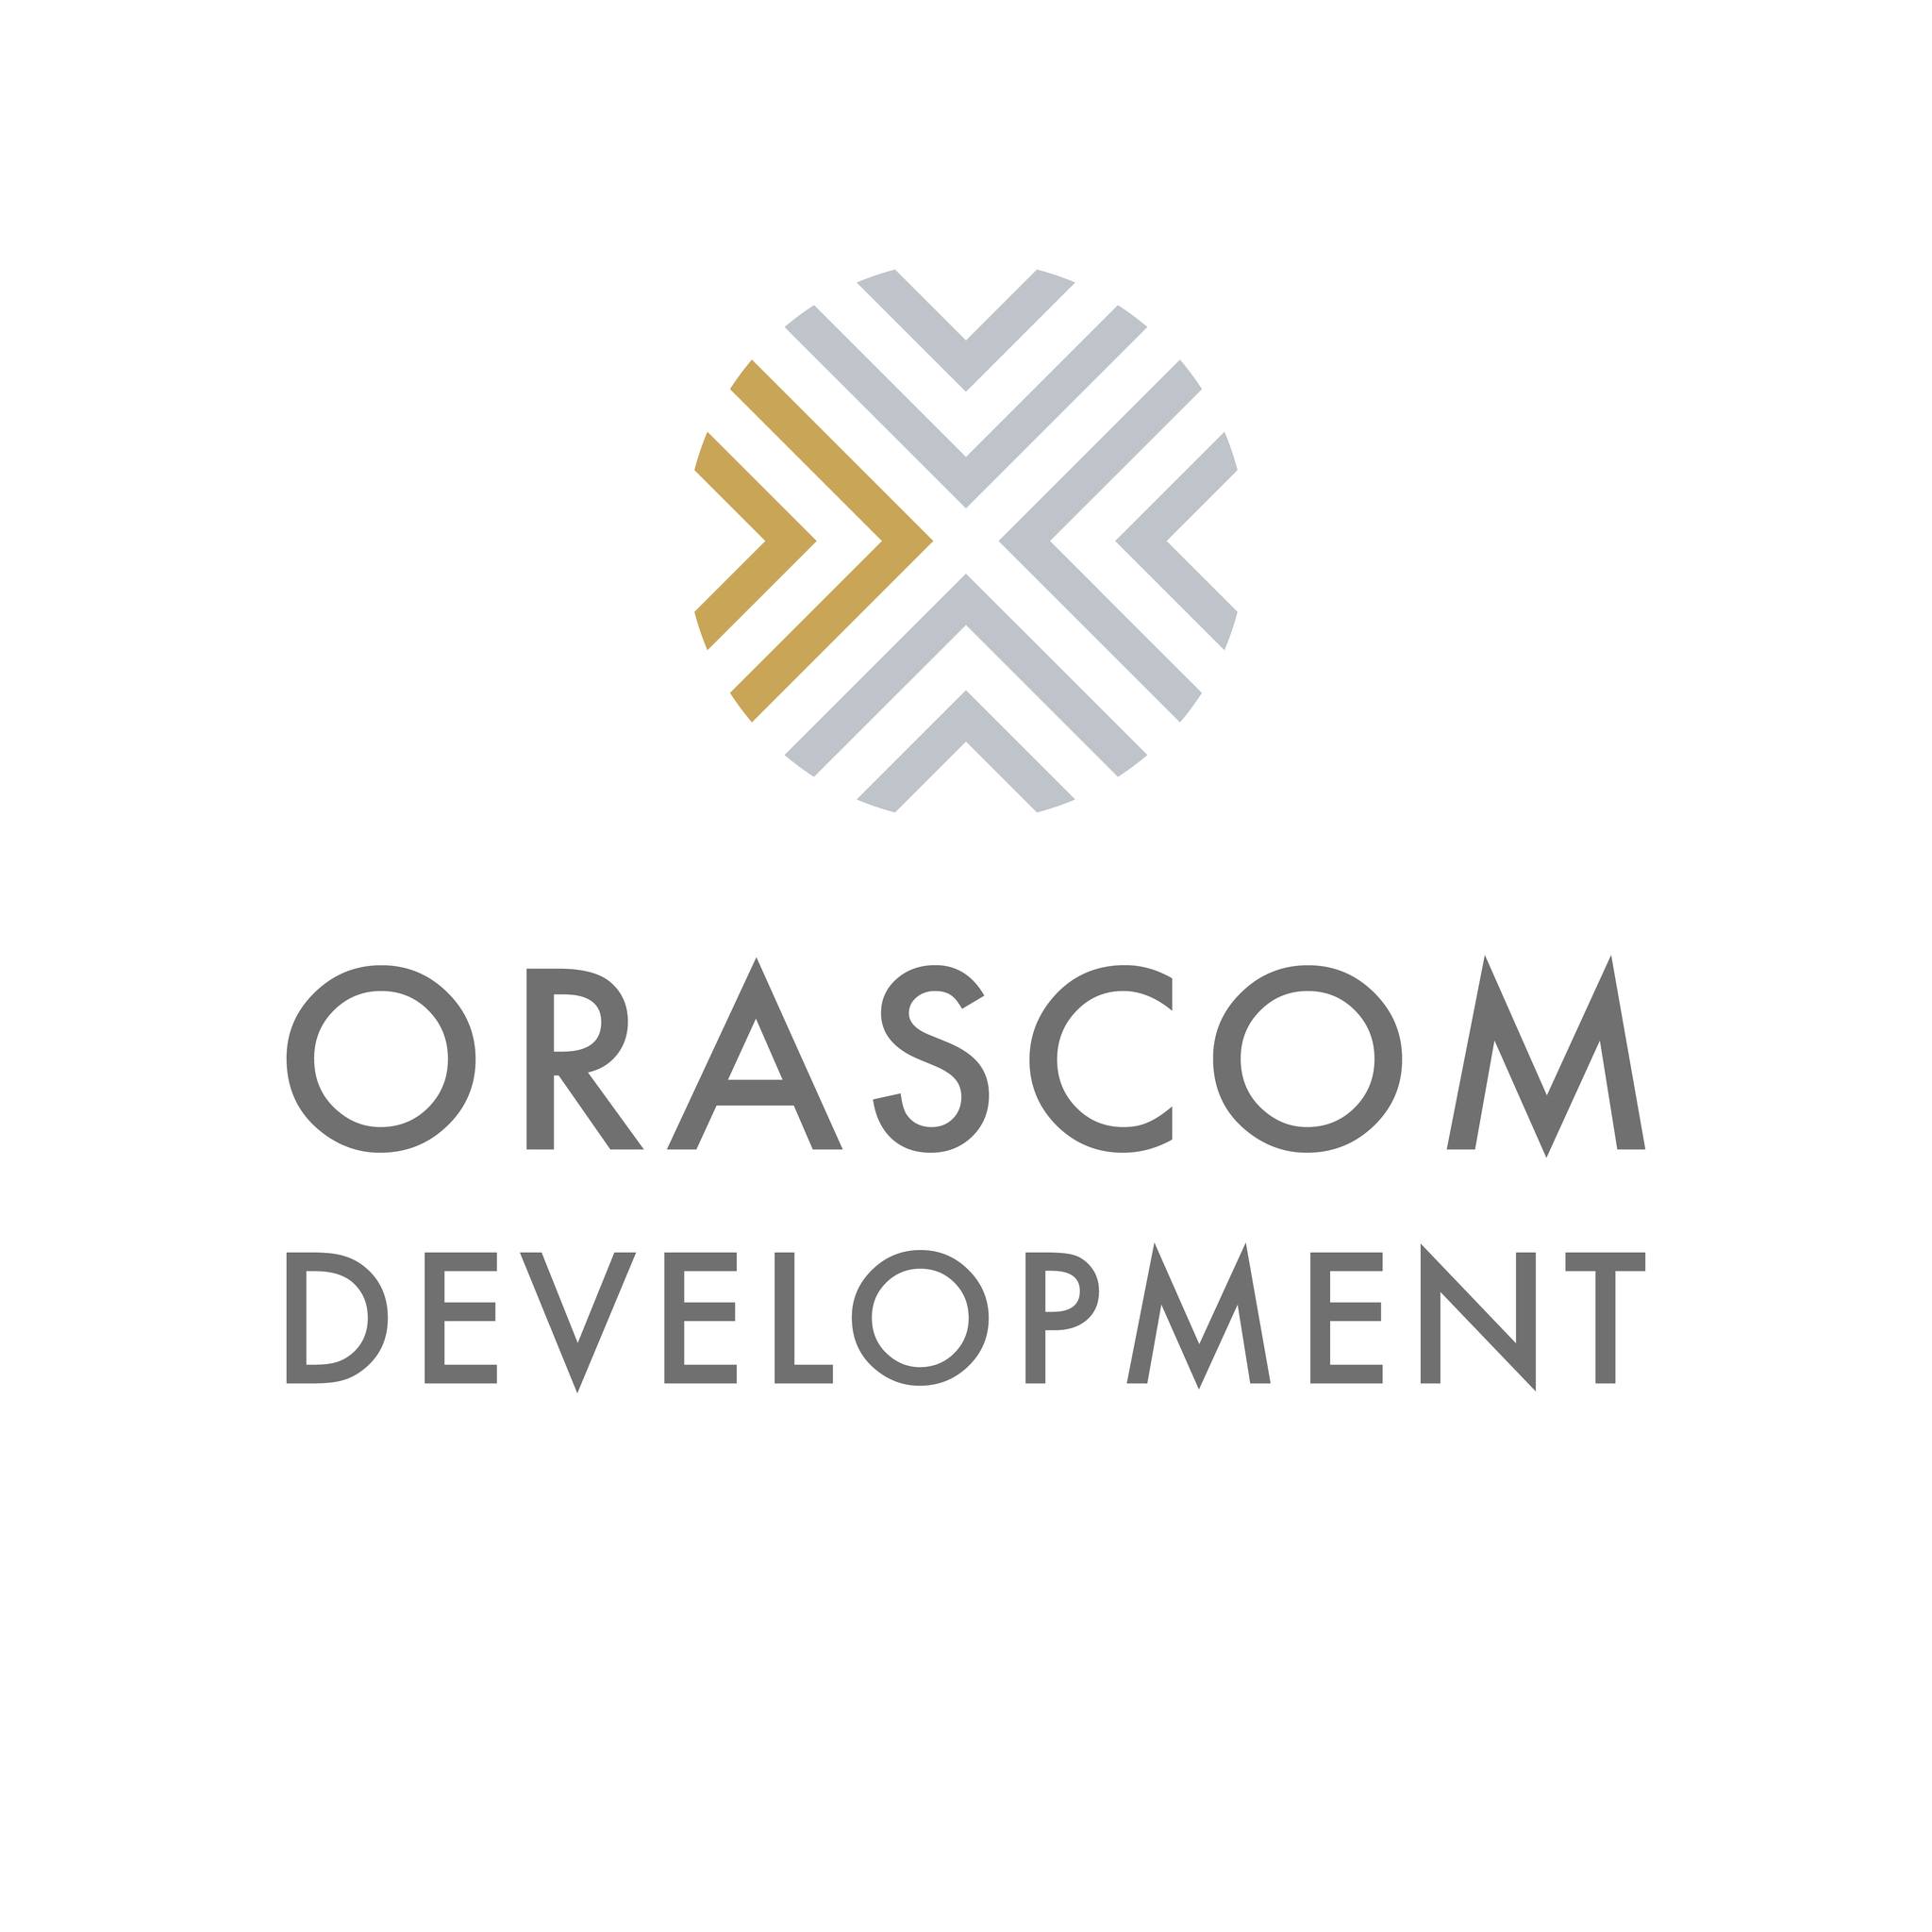 Orscom company